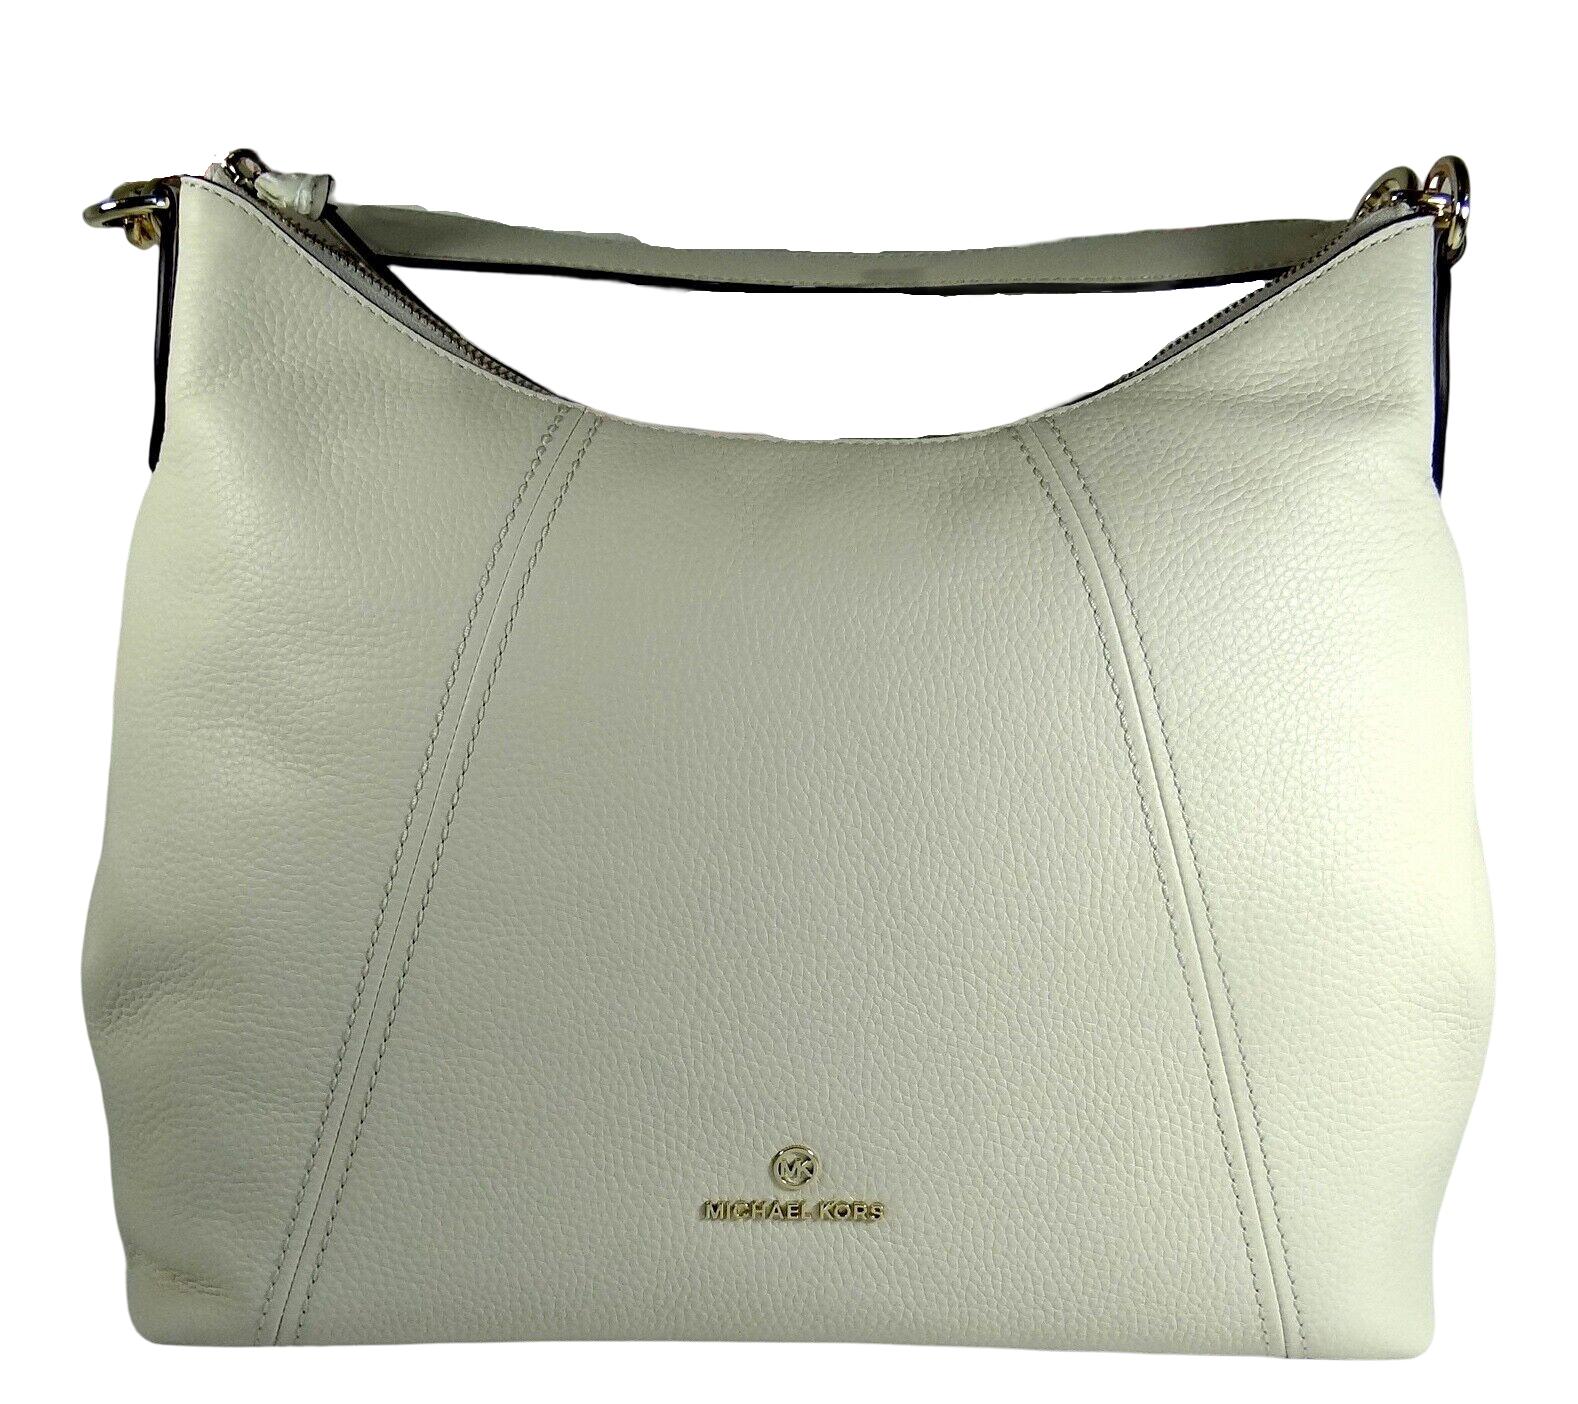 Michael Kors Sienna Pebbled Leather Convertible Shoulder Bag in Green ...